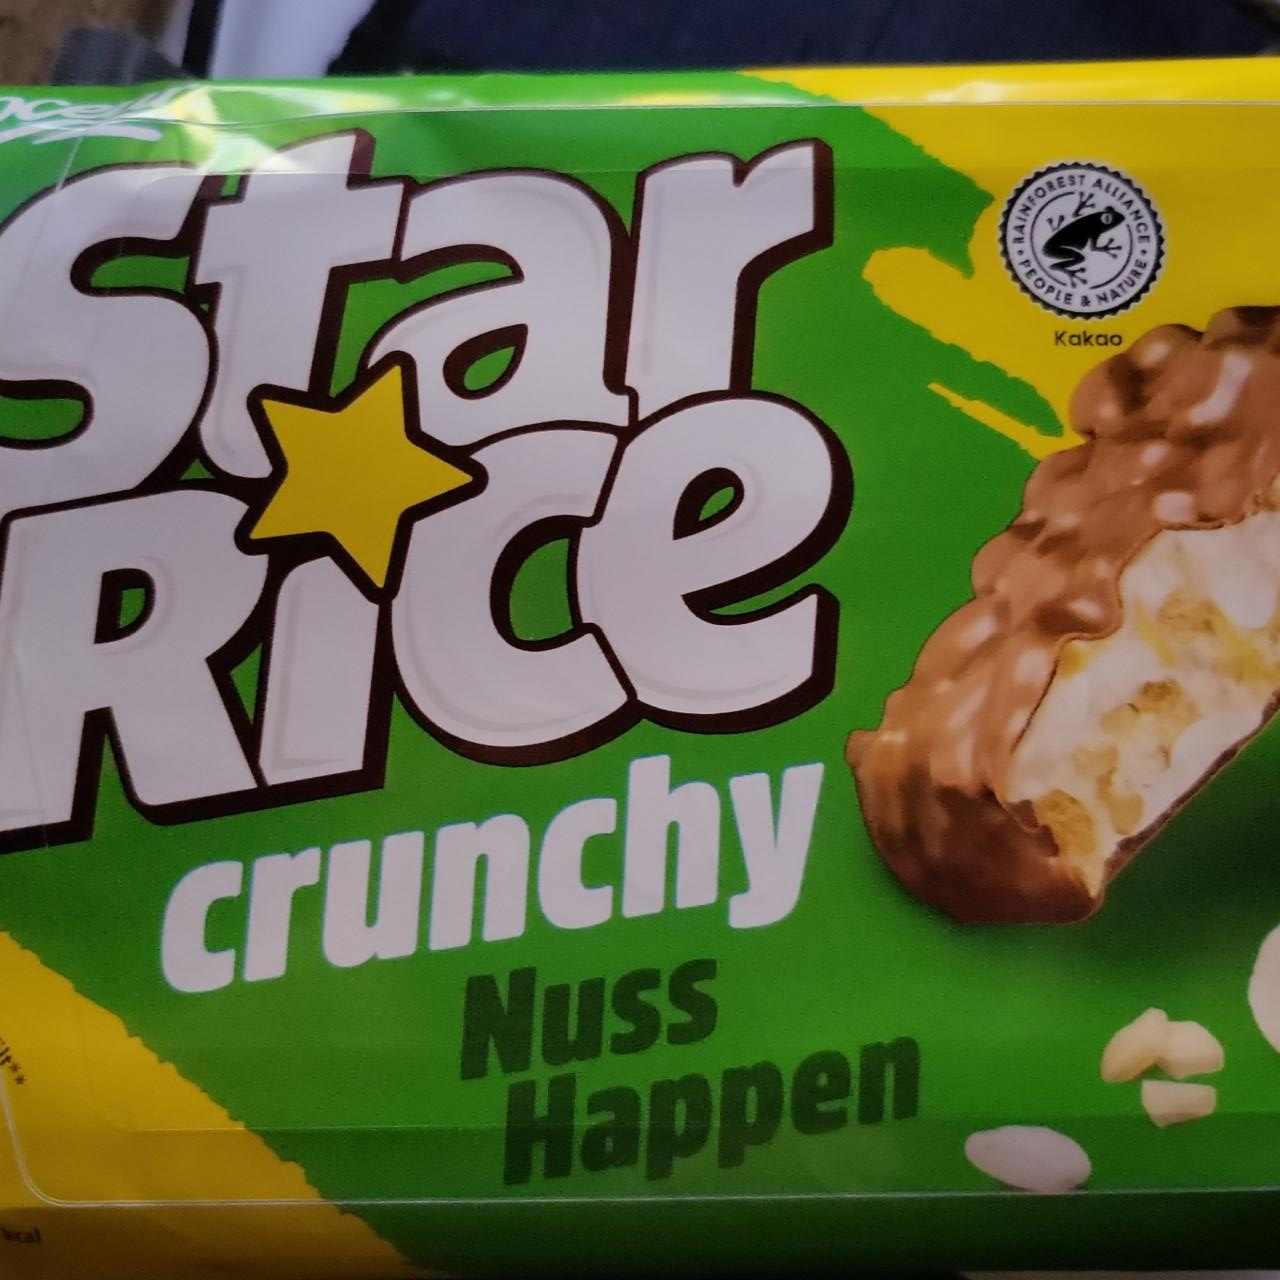 Fotografie - Star Rice crunchy Nuss Happen Choceur